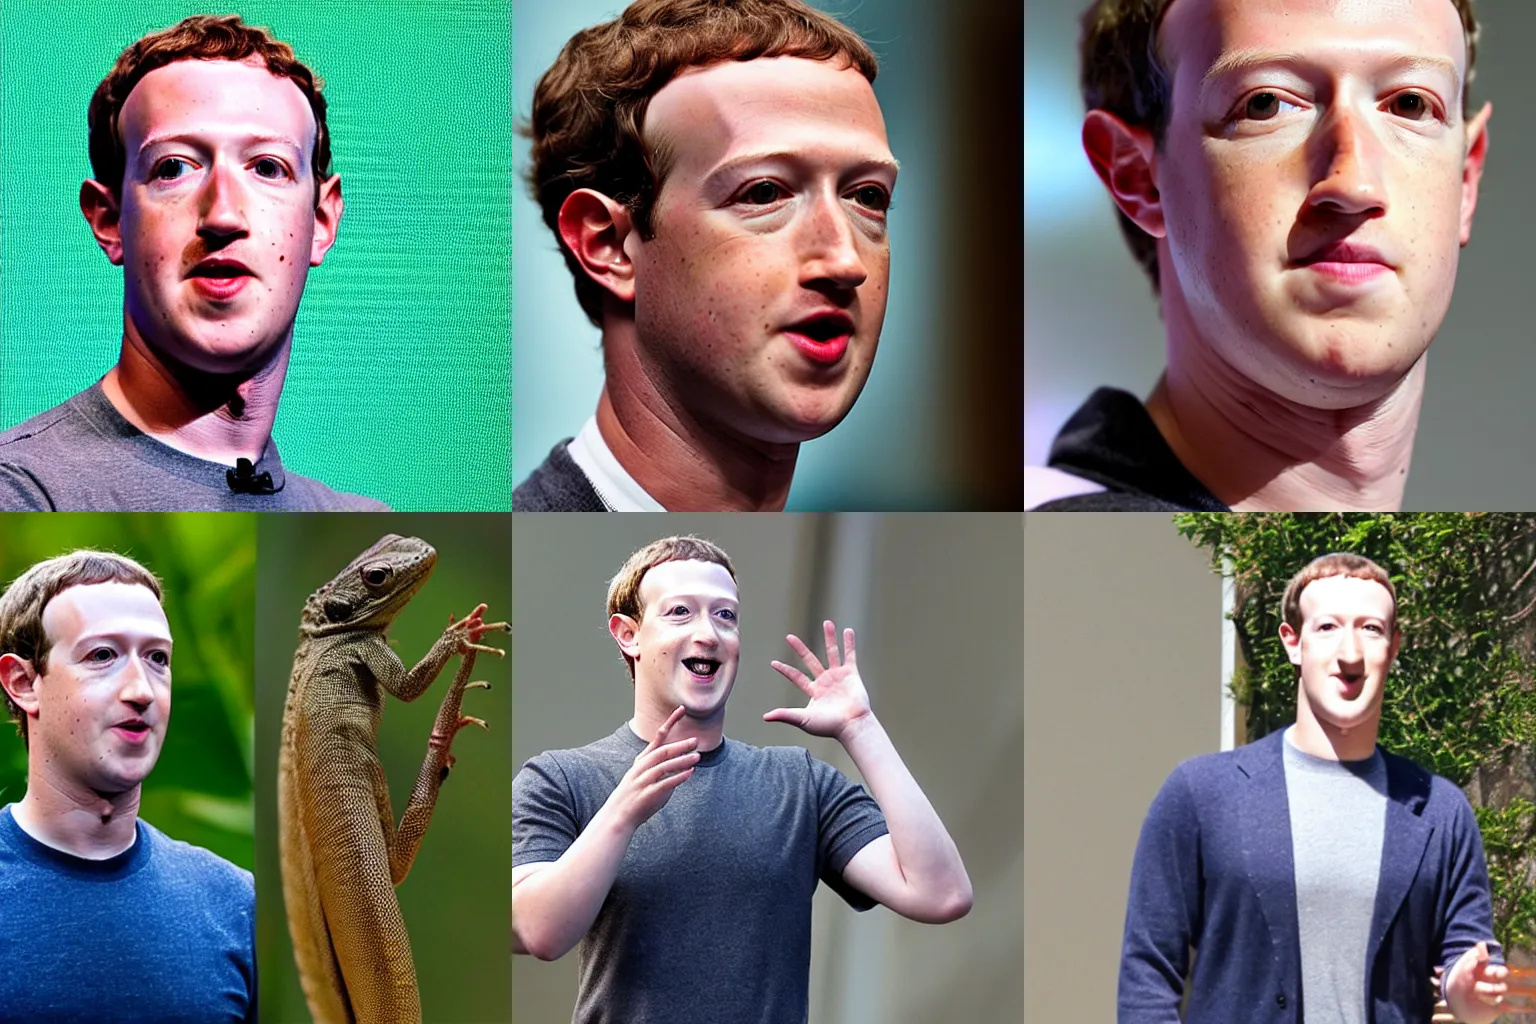 Prompt: Mark Zuckerberg with a lizard face